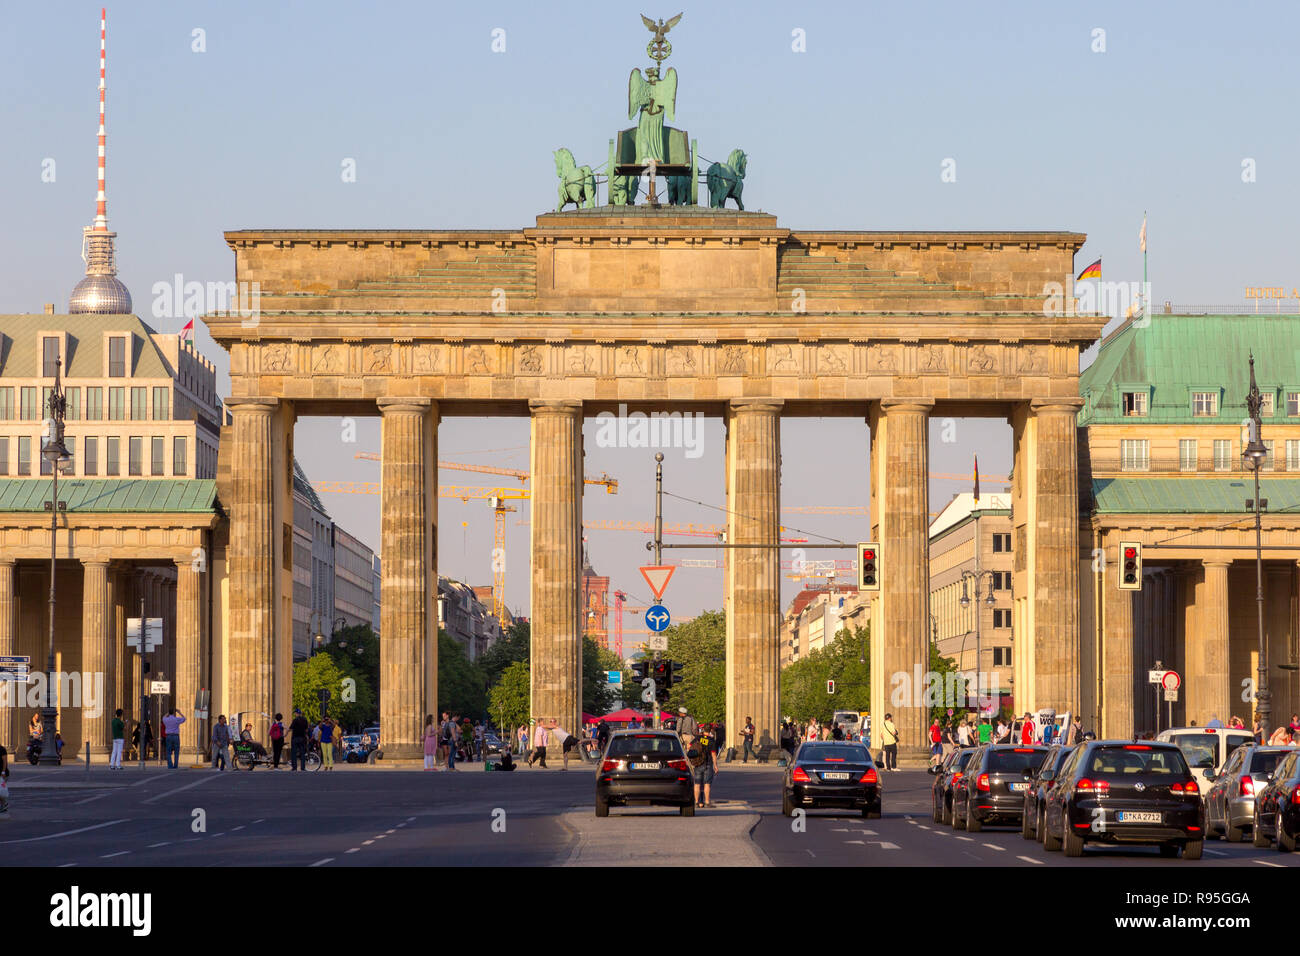 BERLIN, GERMANY - MAY 22, 2014: Famous German landmark and national symbol Brandenburger Tor (Brandenburg Gate) in Berlin. Stock Photo